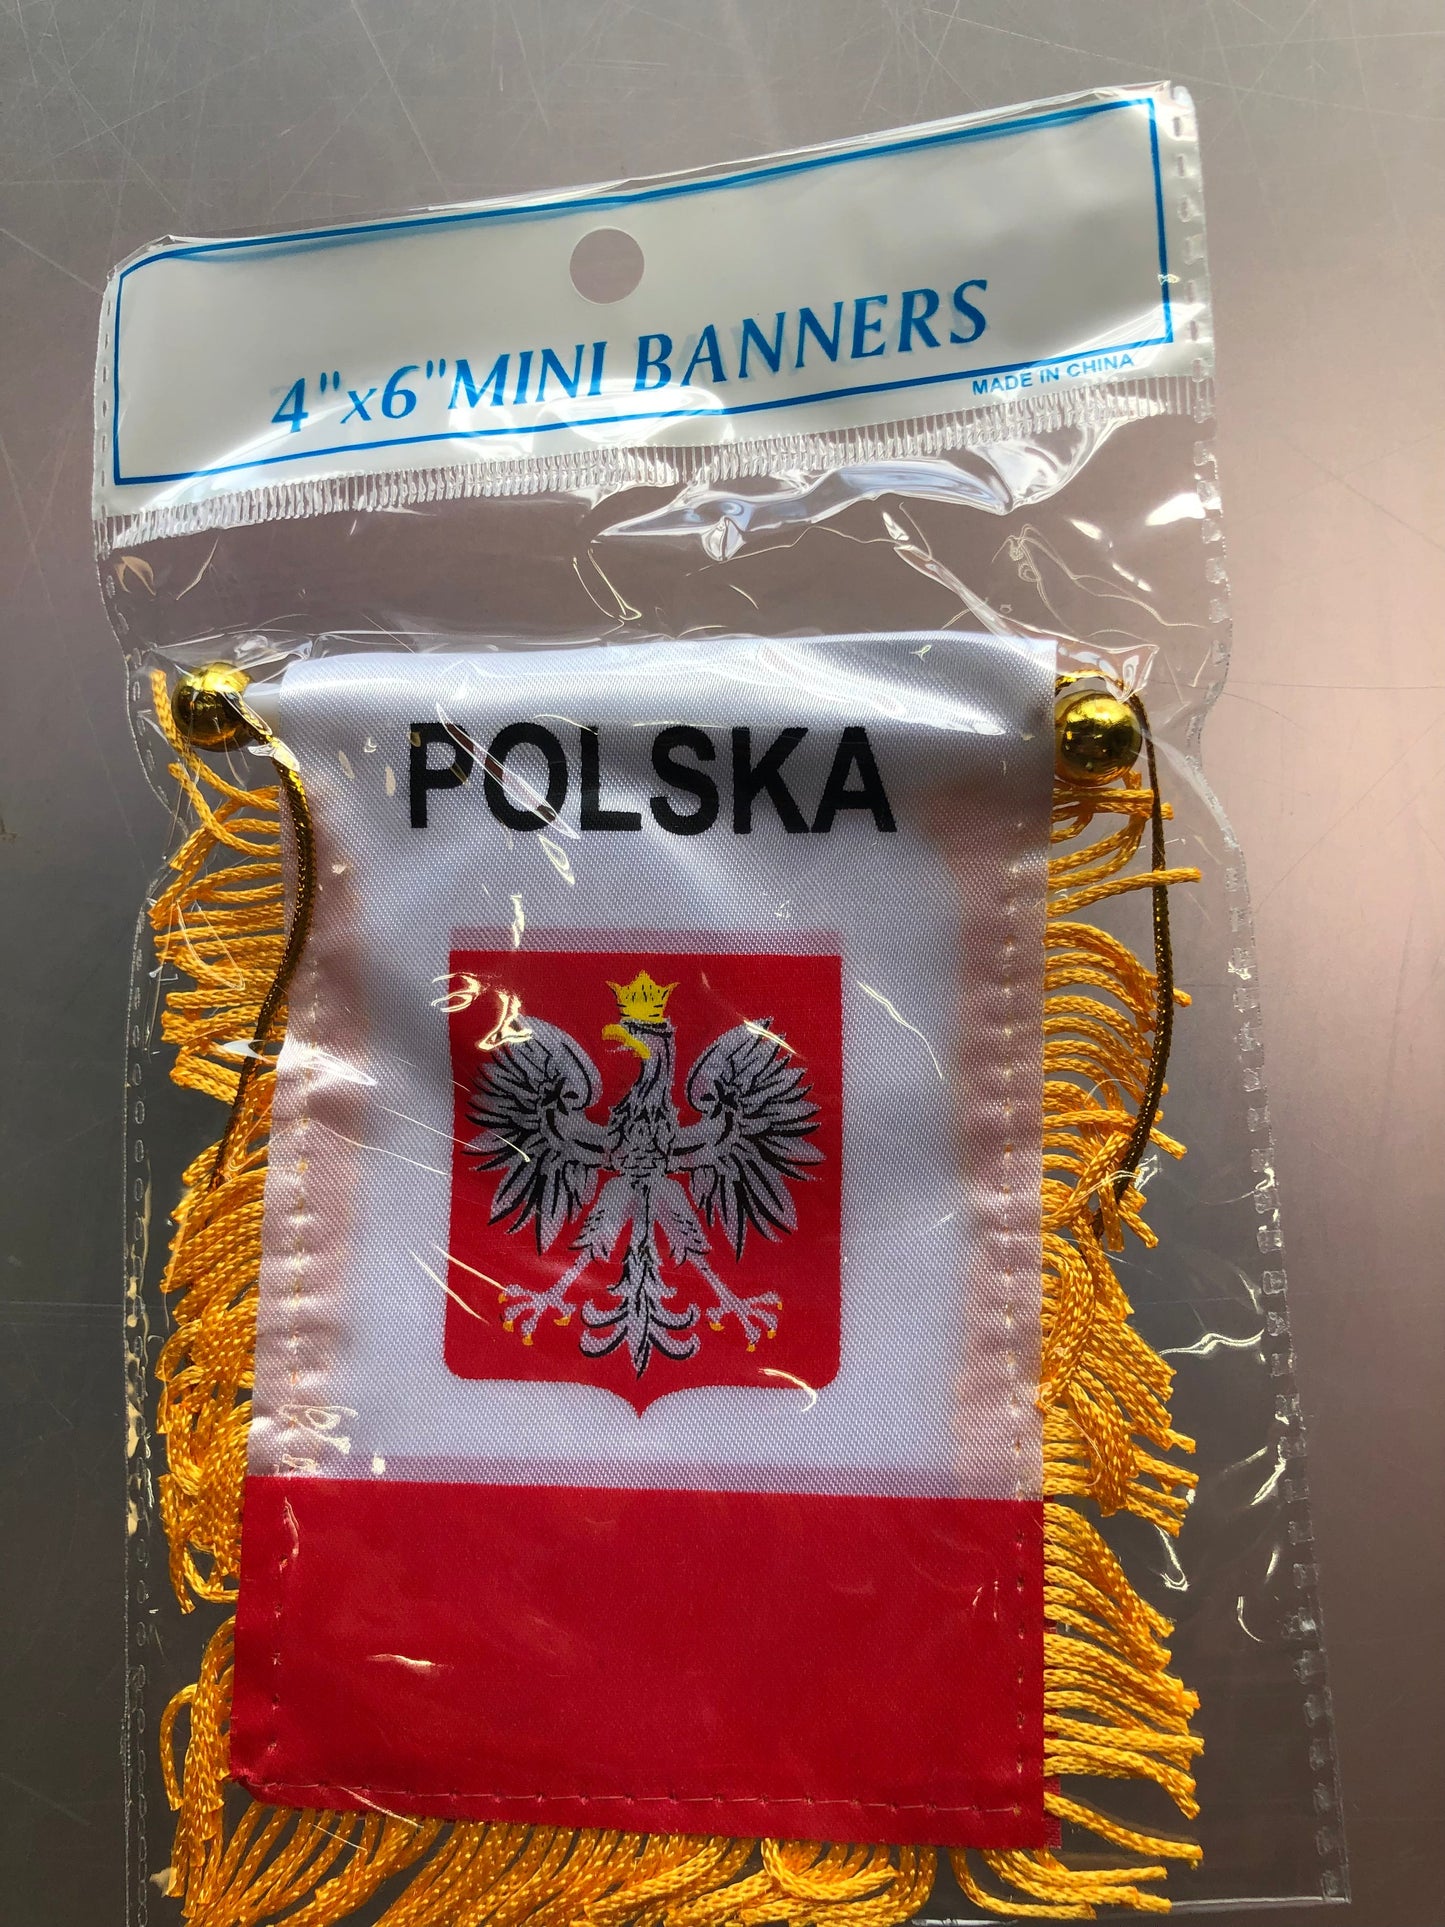 Bulk of Poland Polish Polska banner mini flag w/ suction cup car window hanger 4"x6"in 12 Pack